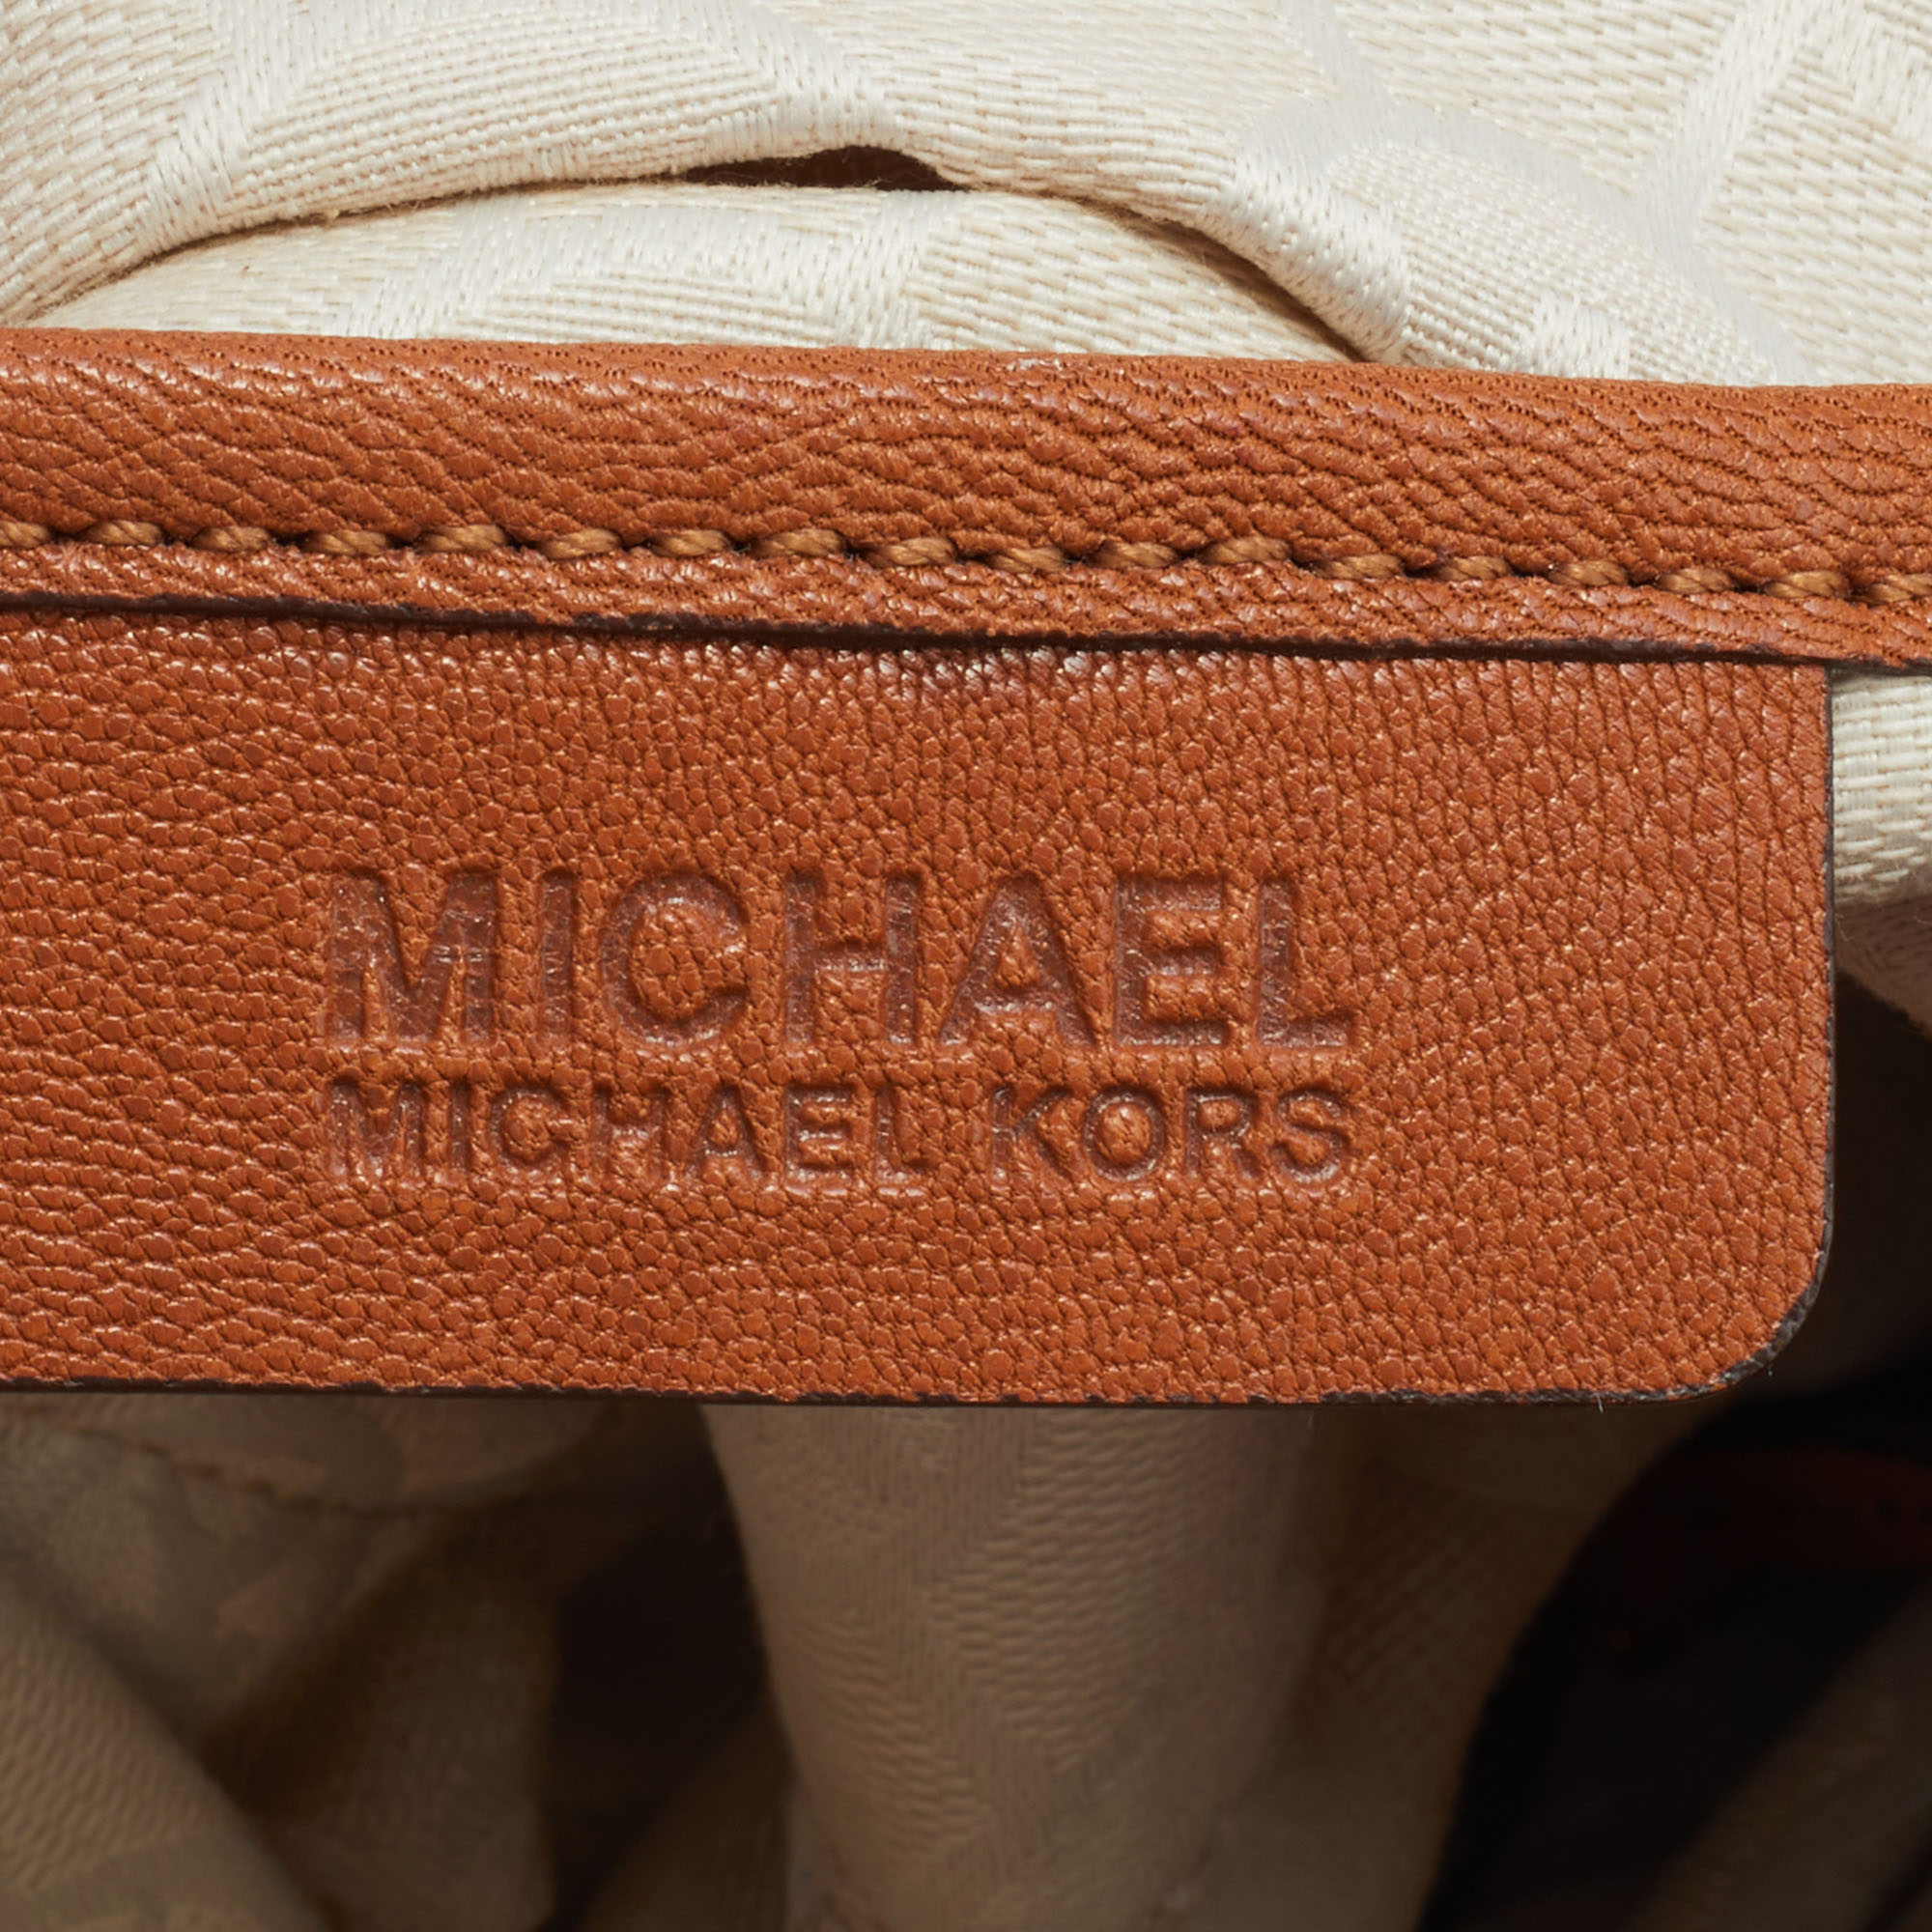 MICHAEL Michael Kors Tan Leather Large Hamilton North South Tote